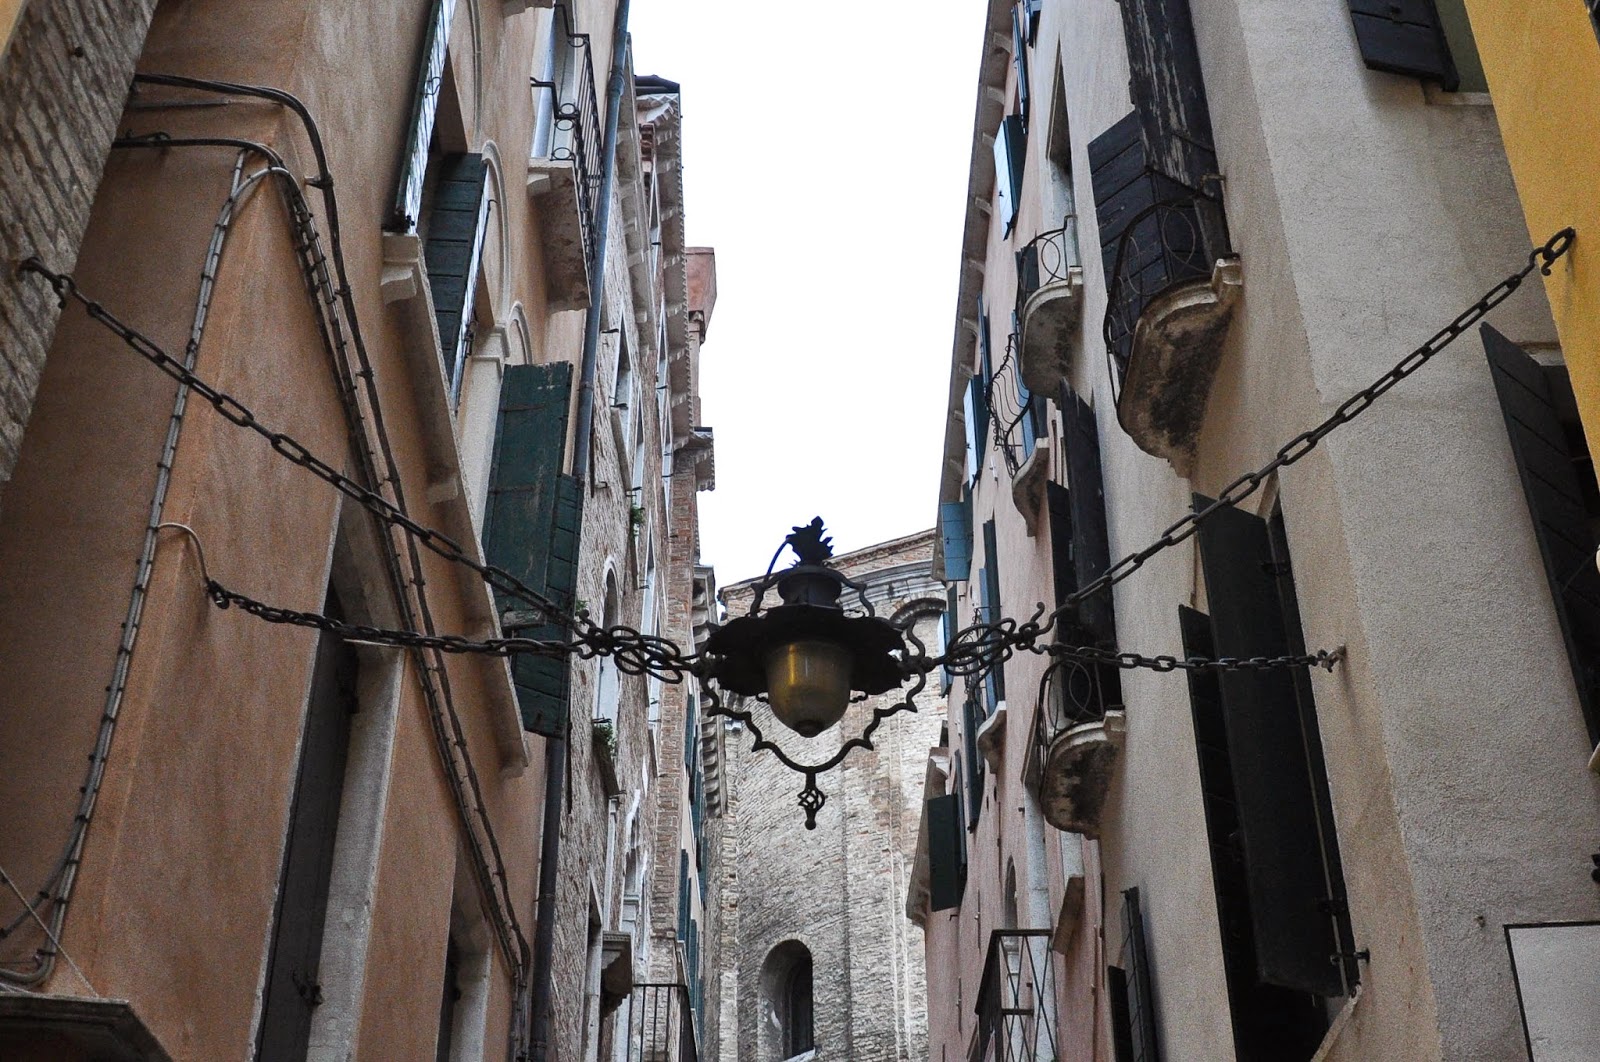 A street light in Venice